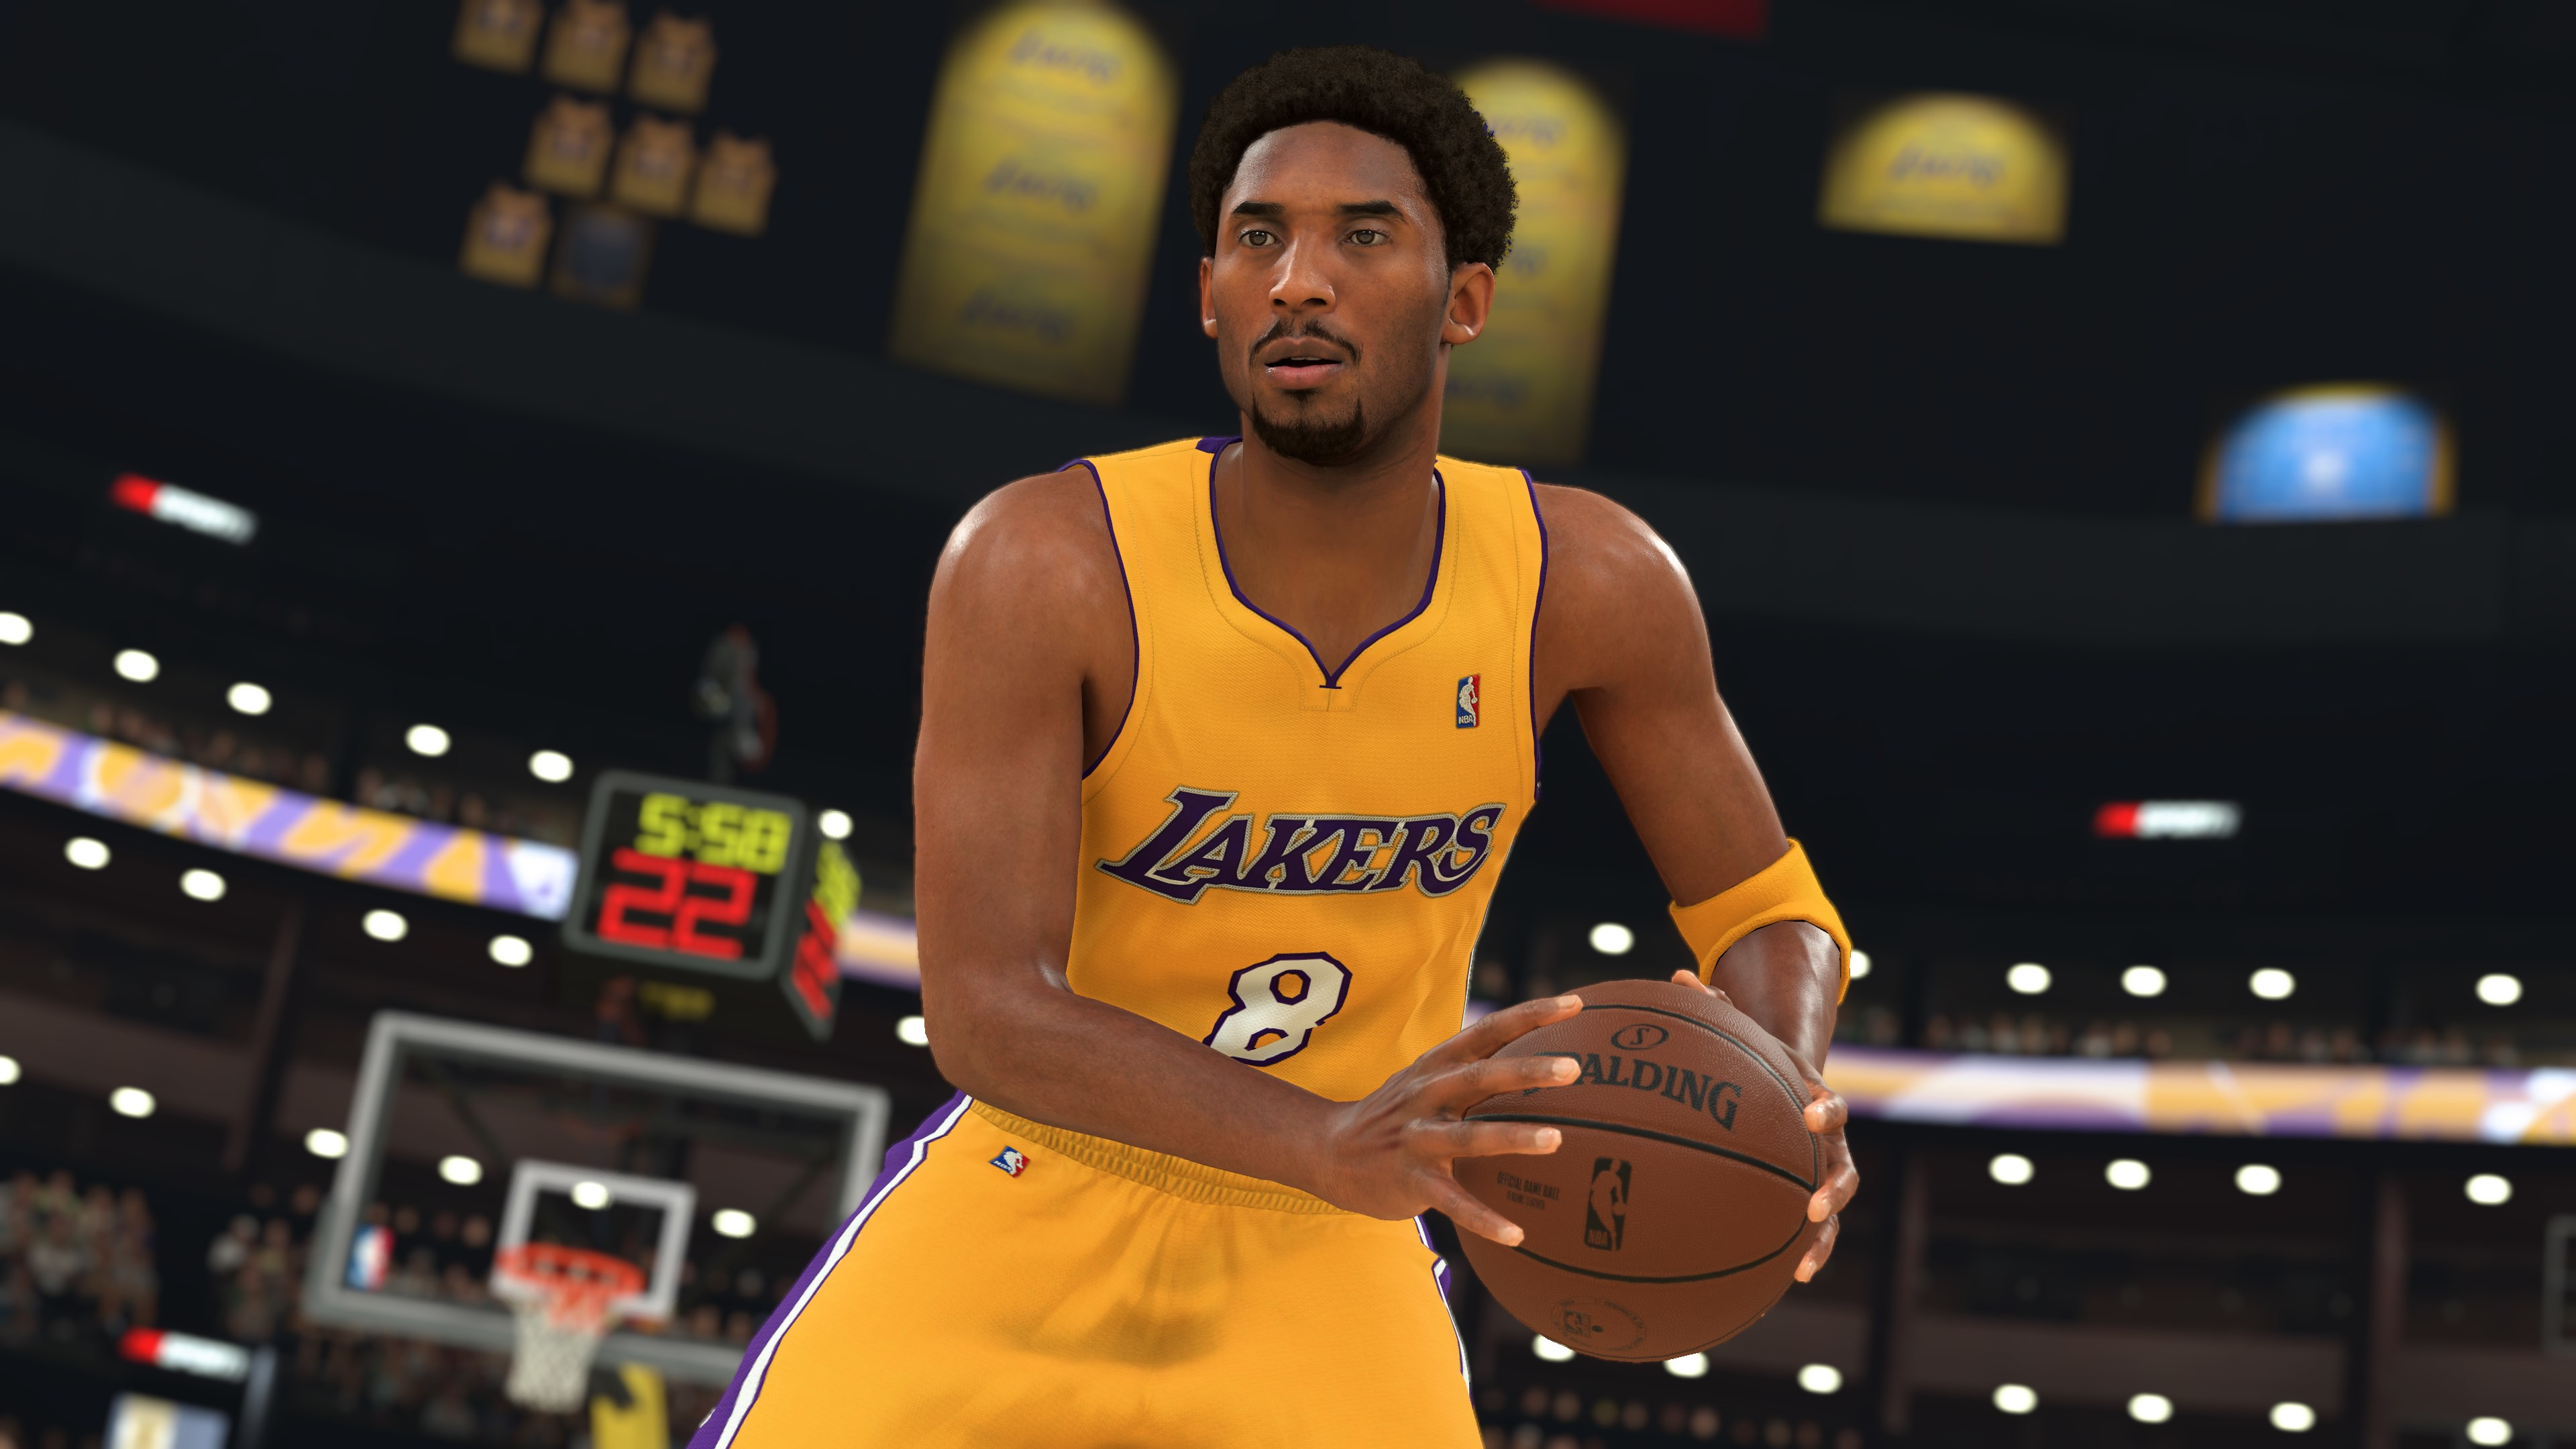 NBA 2K24 Kobe Bryant Edition XBOX One Account